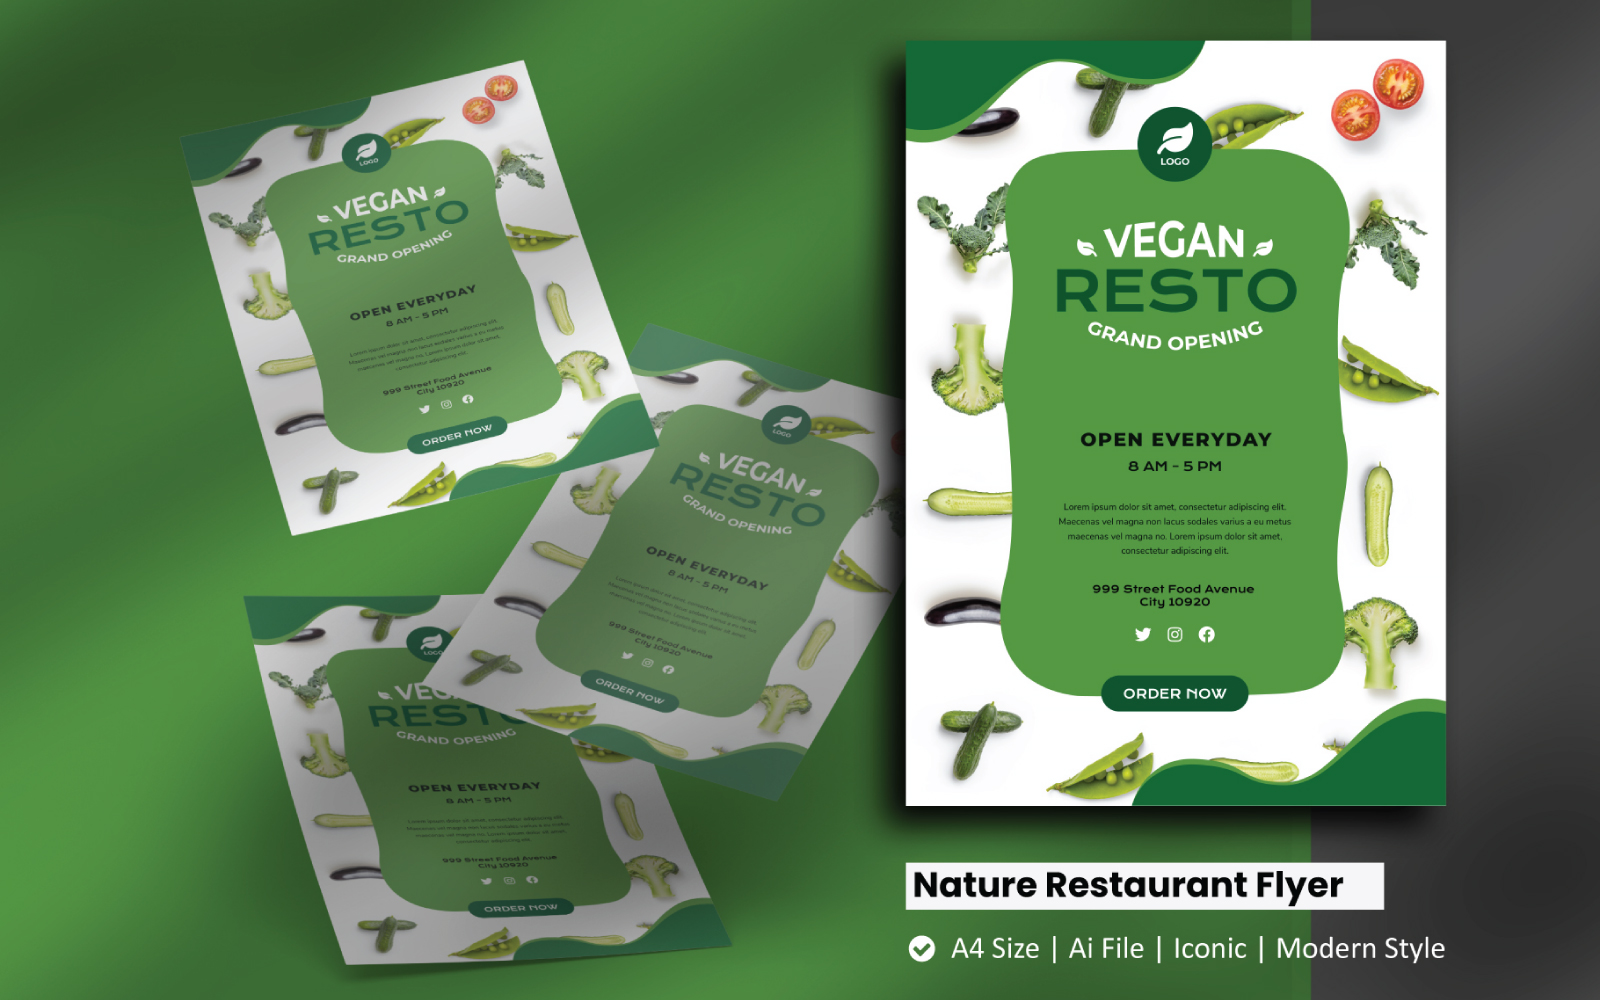 Vegan Restaurant Brochure Corporate Identity Template